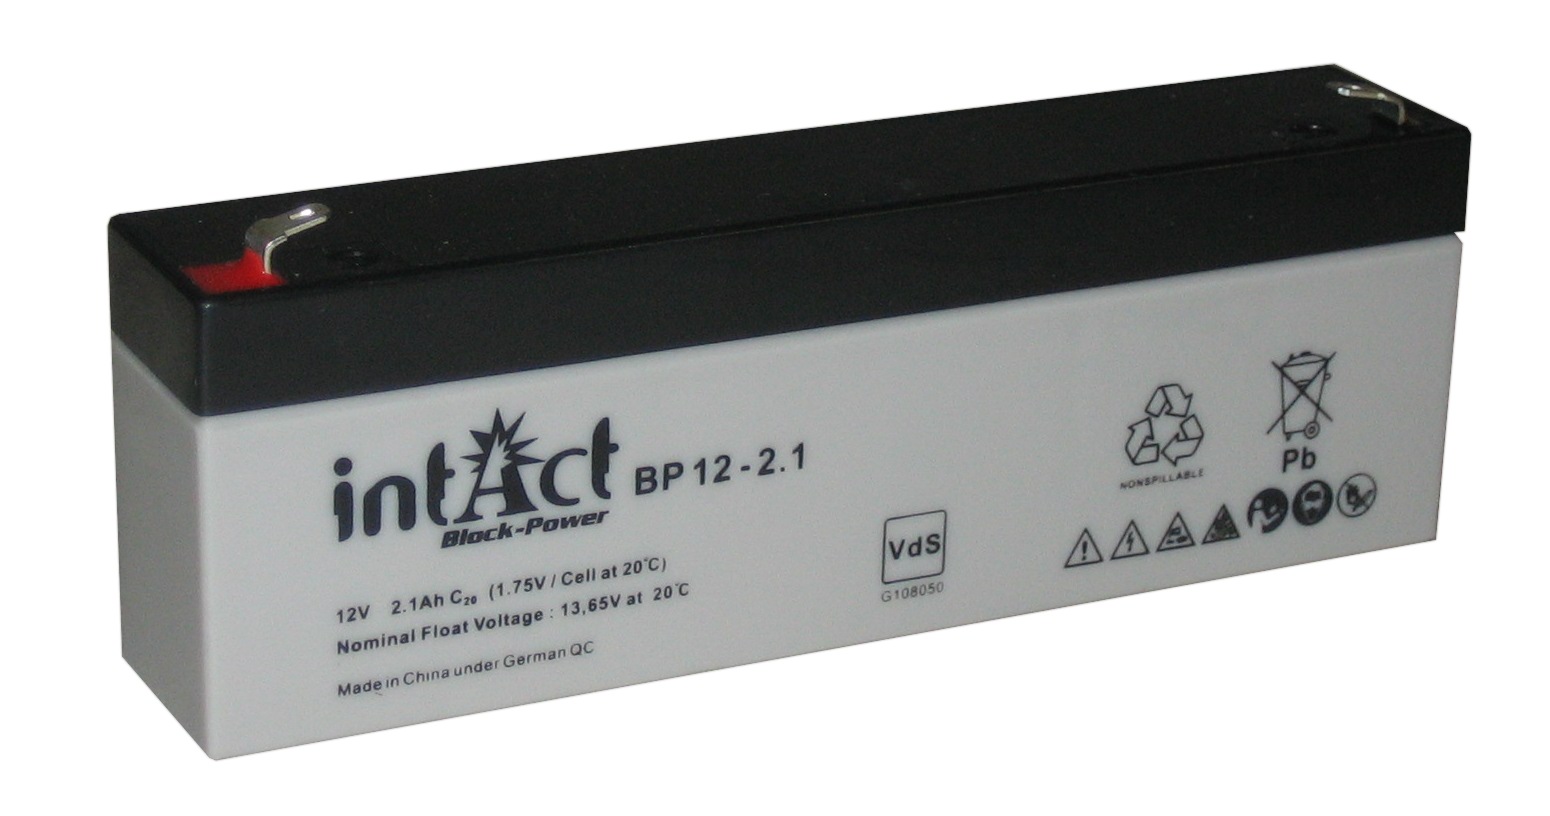 Intact Block-Power 12 V 2,1Ah (c20) 178x35x66 1/S-4.8